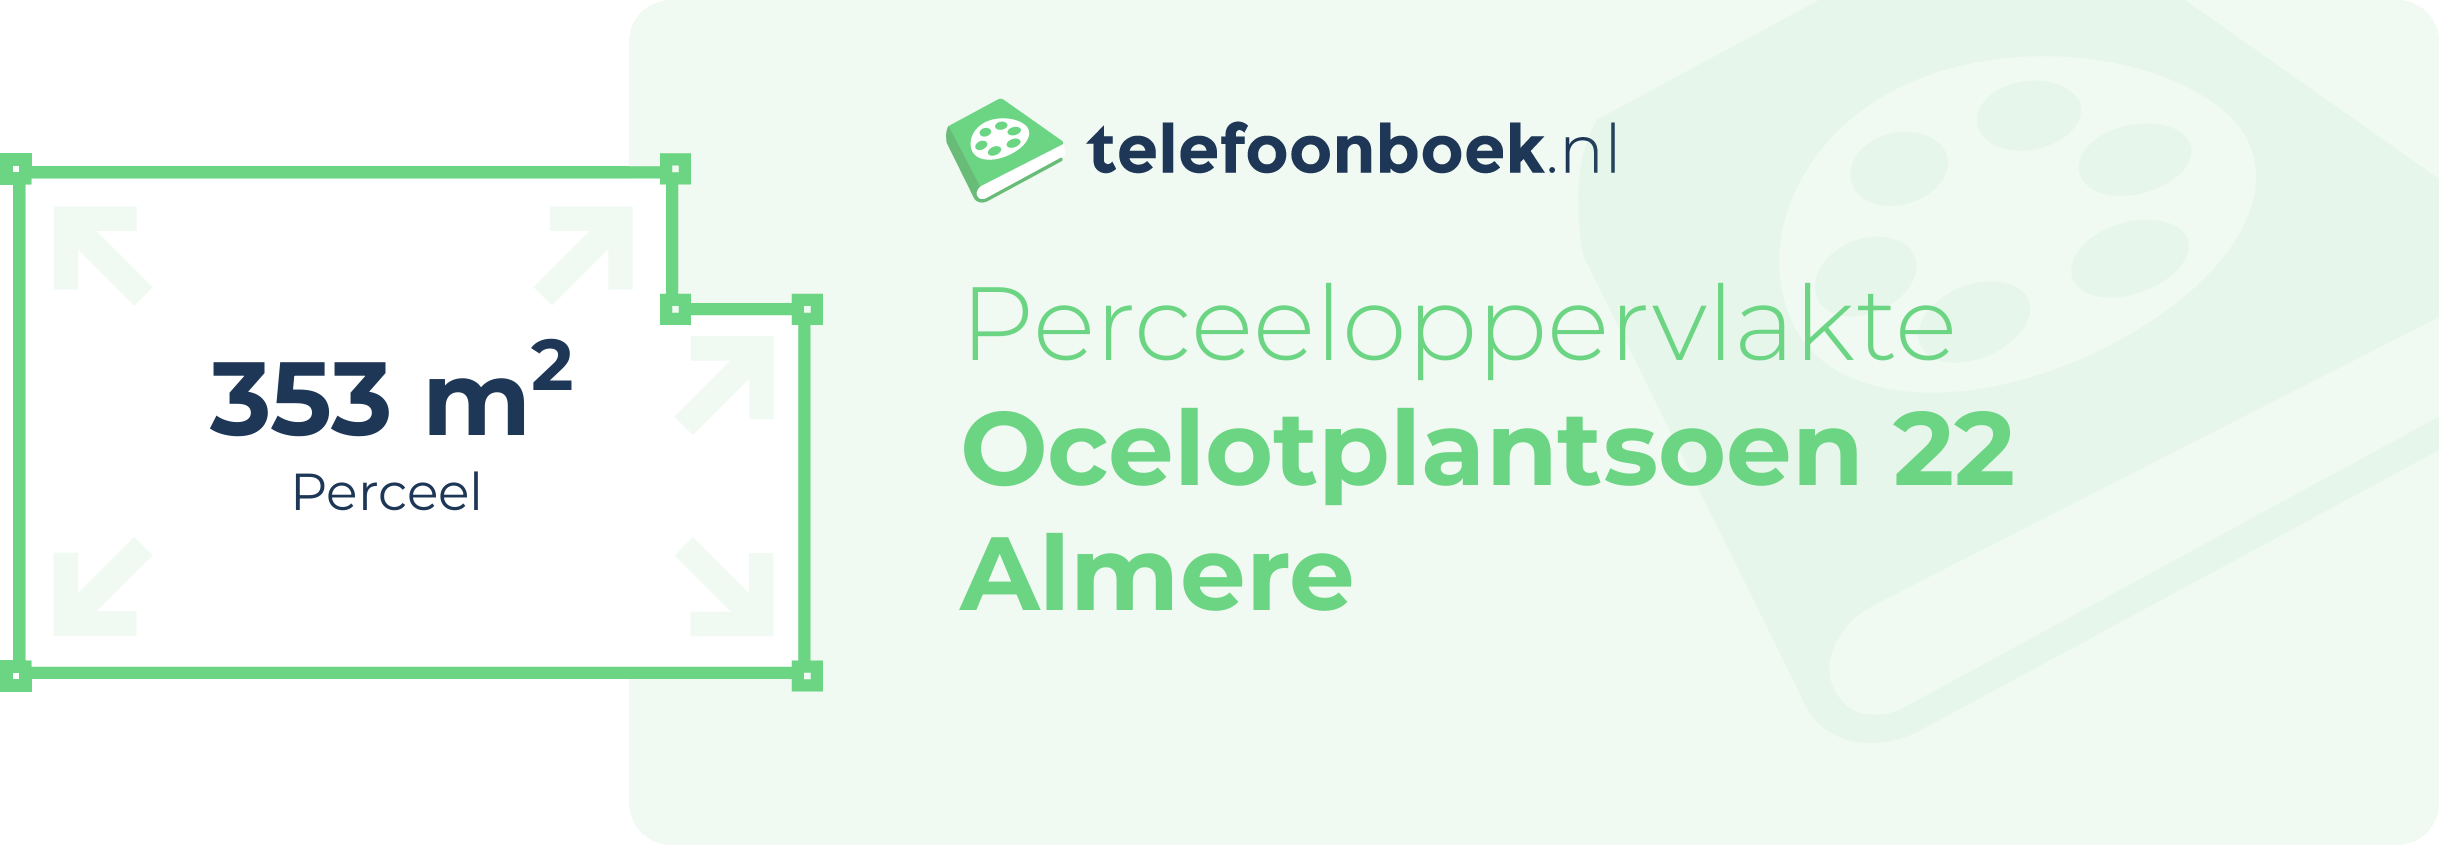 Perceeloppervlakte Ocelotplantsoen 22 Almere